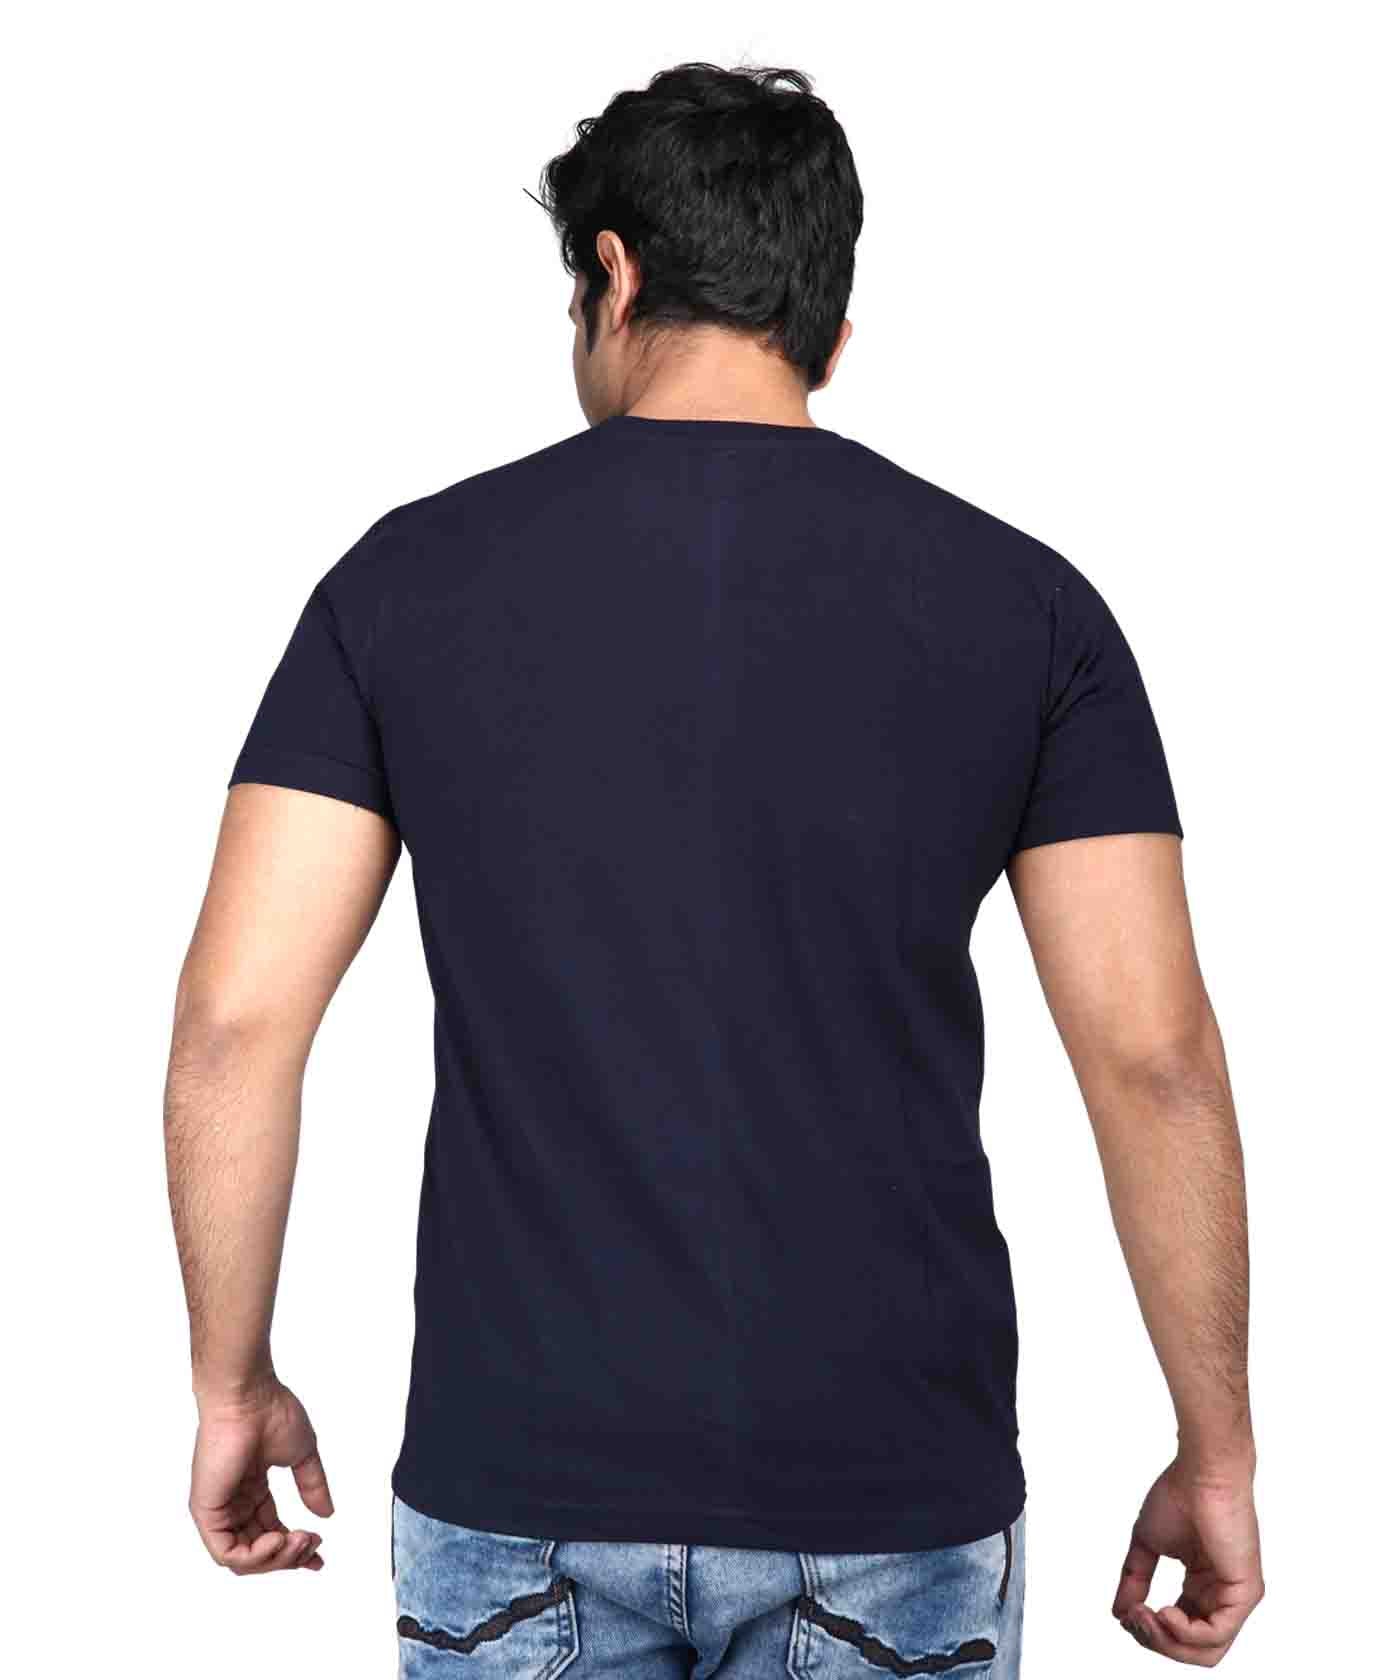 India - Premium Round Neck Cotton Tees for Men - Navy Blue